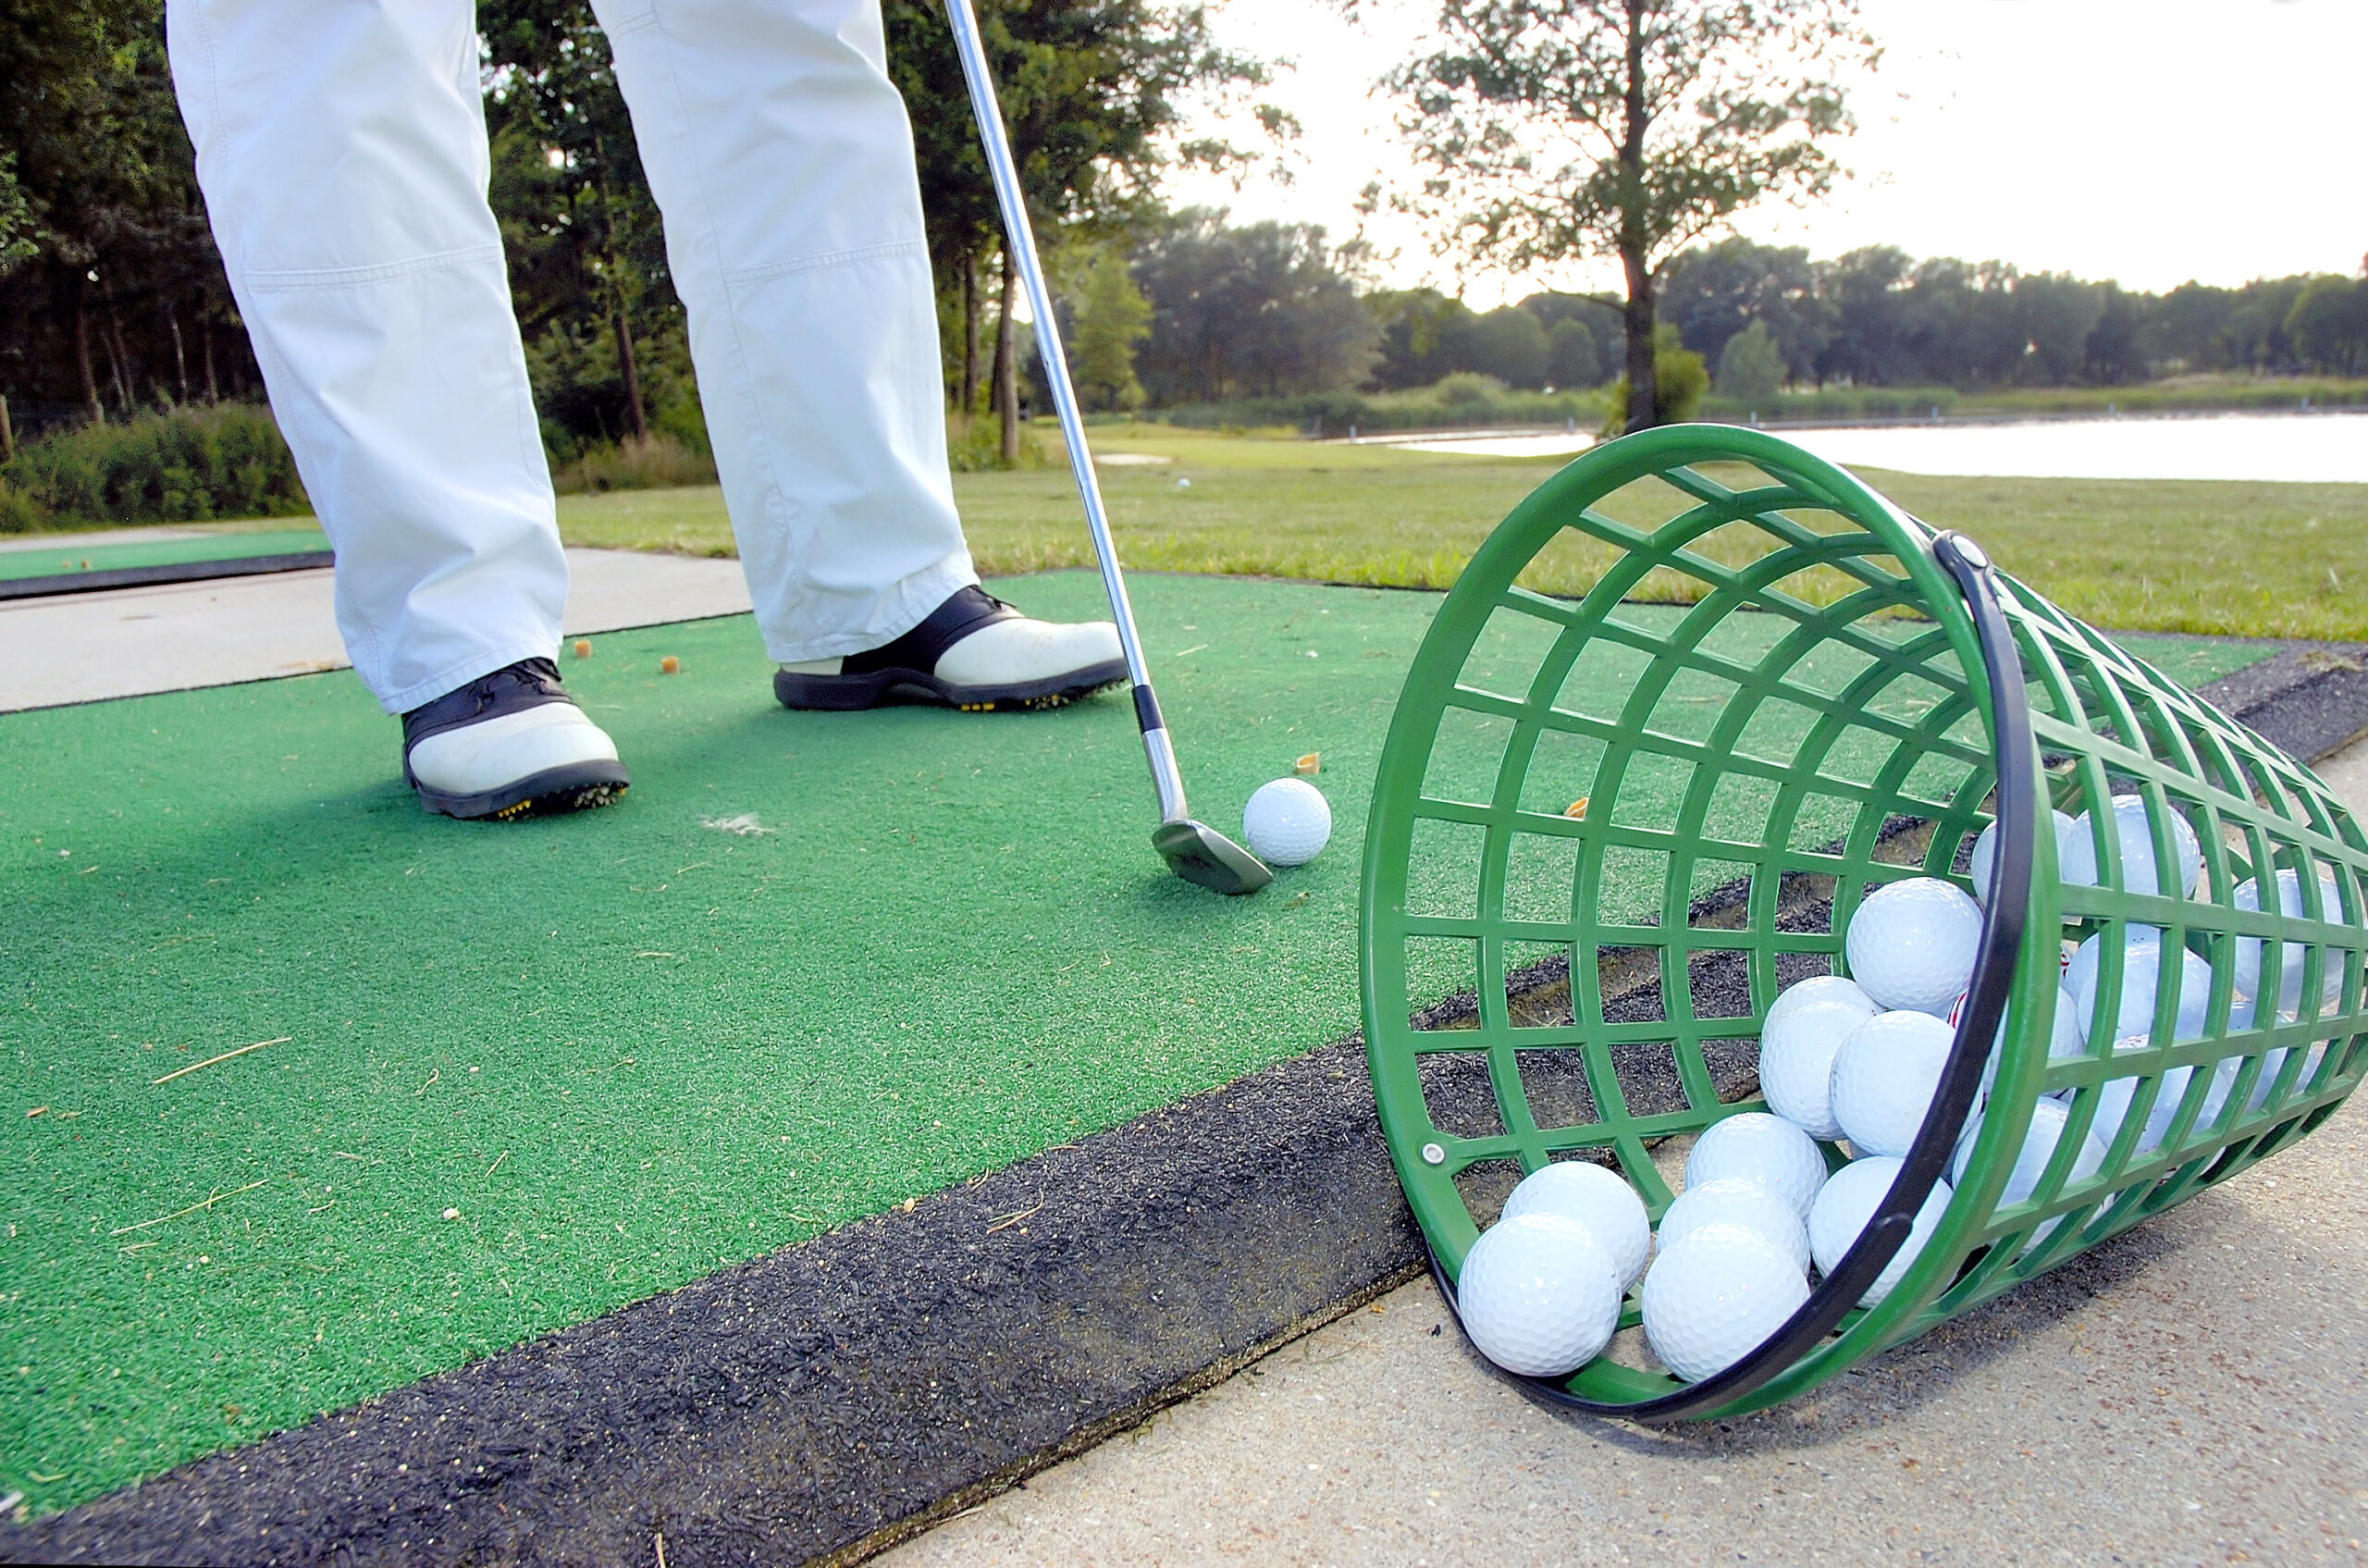 Range ball basket and golfer hitting golf balls.